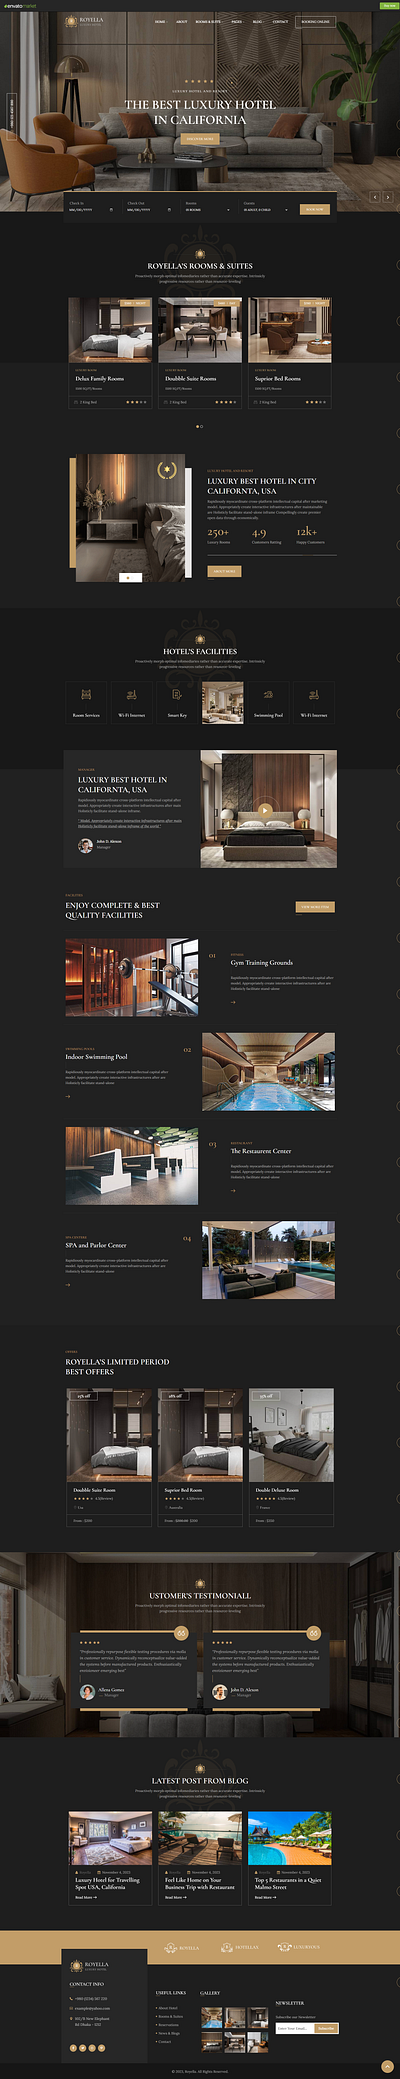 Royella - Resort & Hotel Booking Multi-Purpose WordPress Theme travel